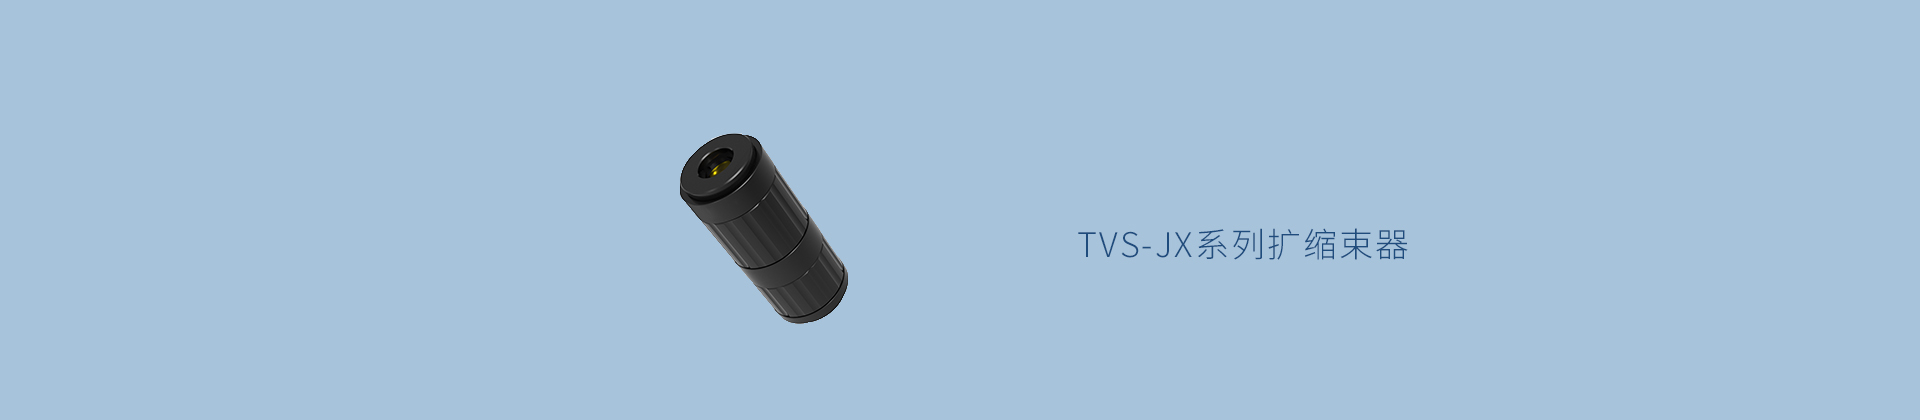 TVS-JX系列扩缩束器